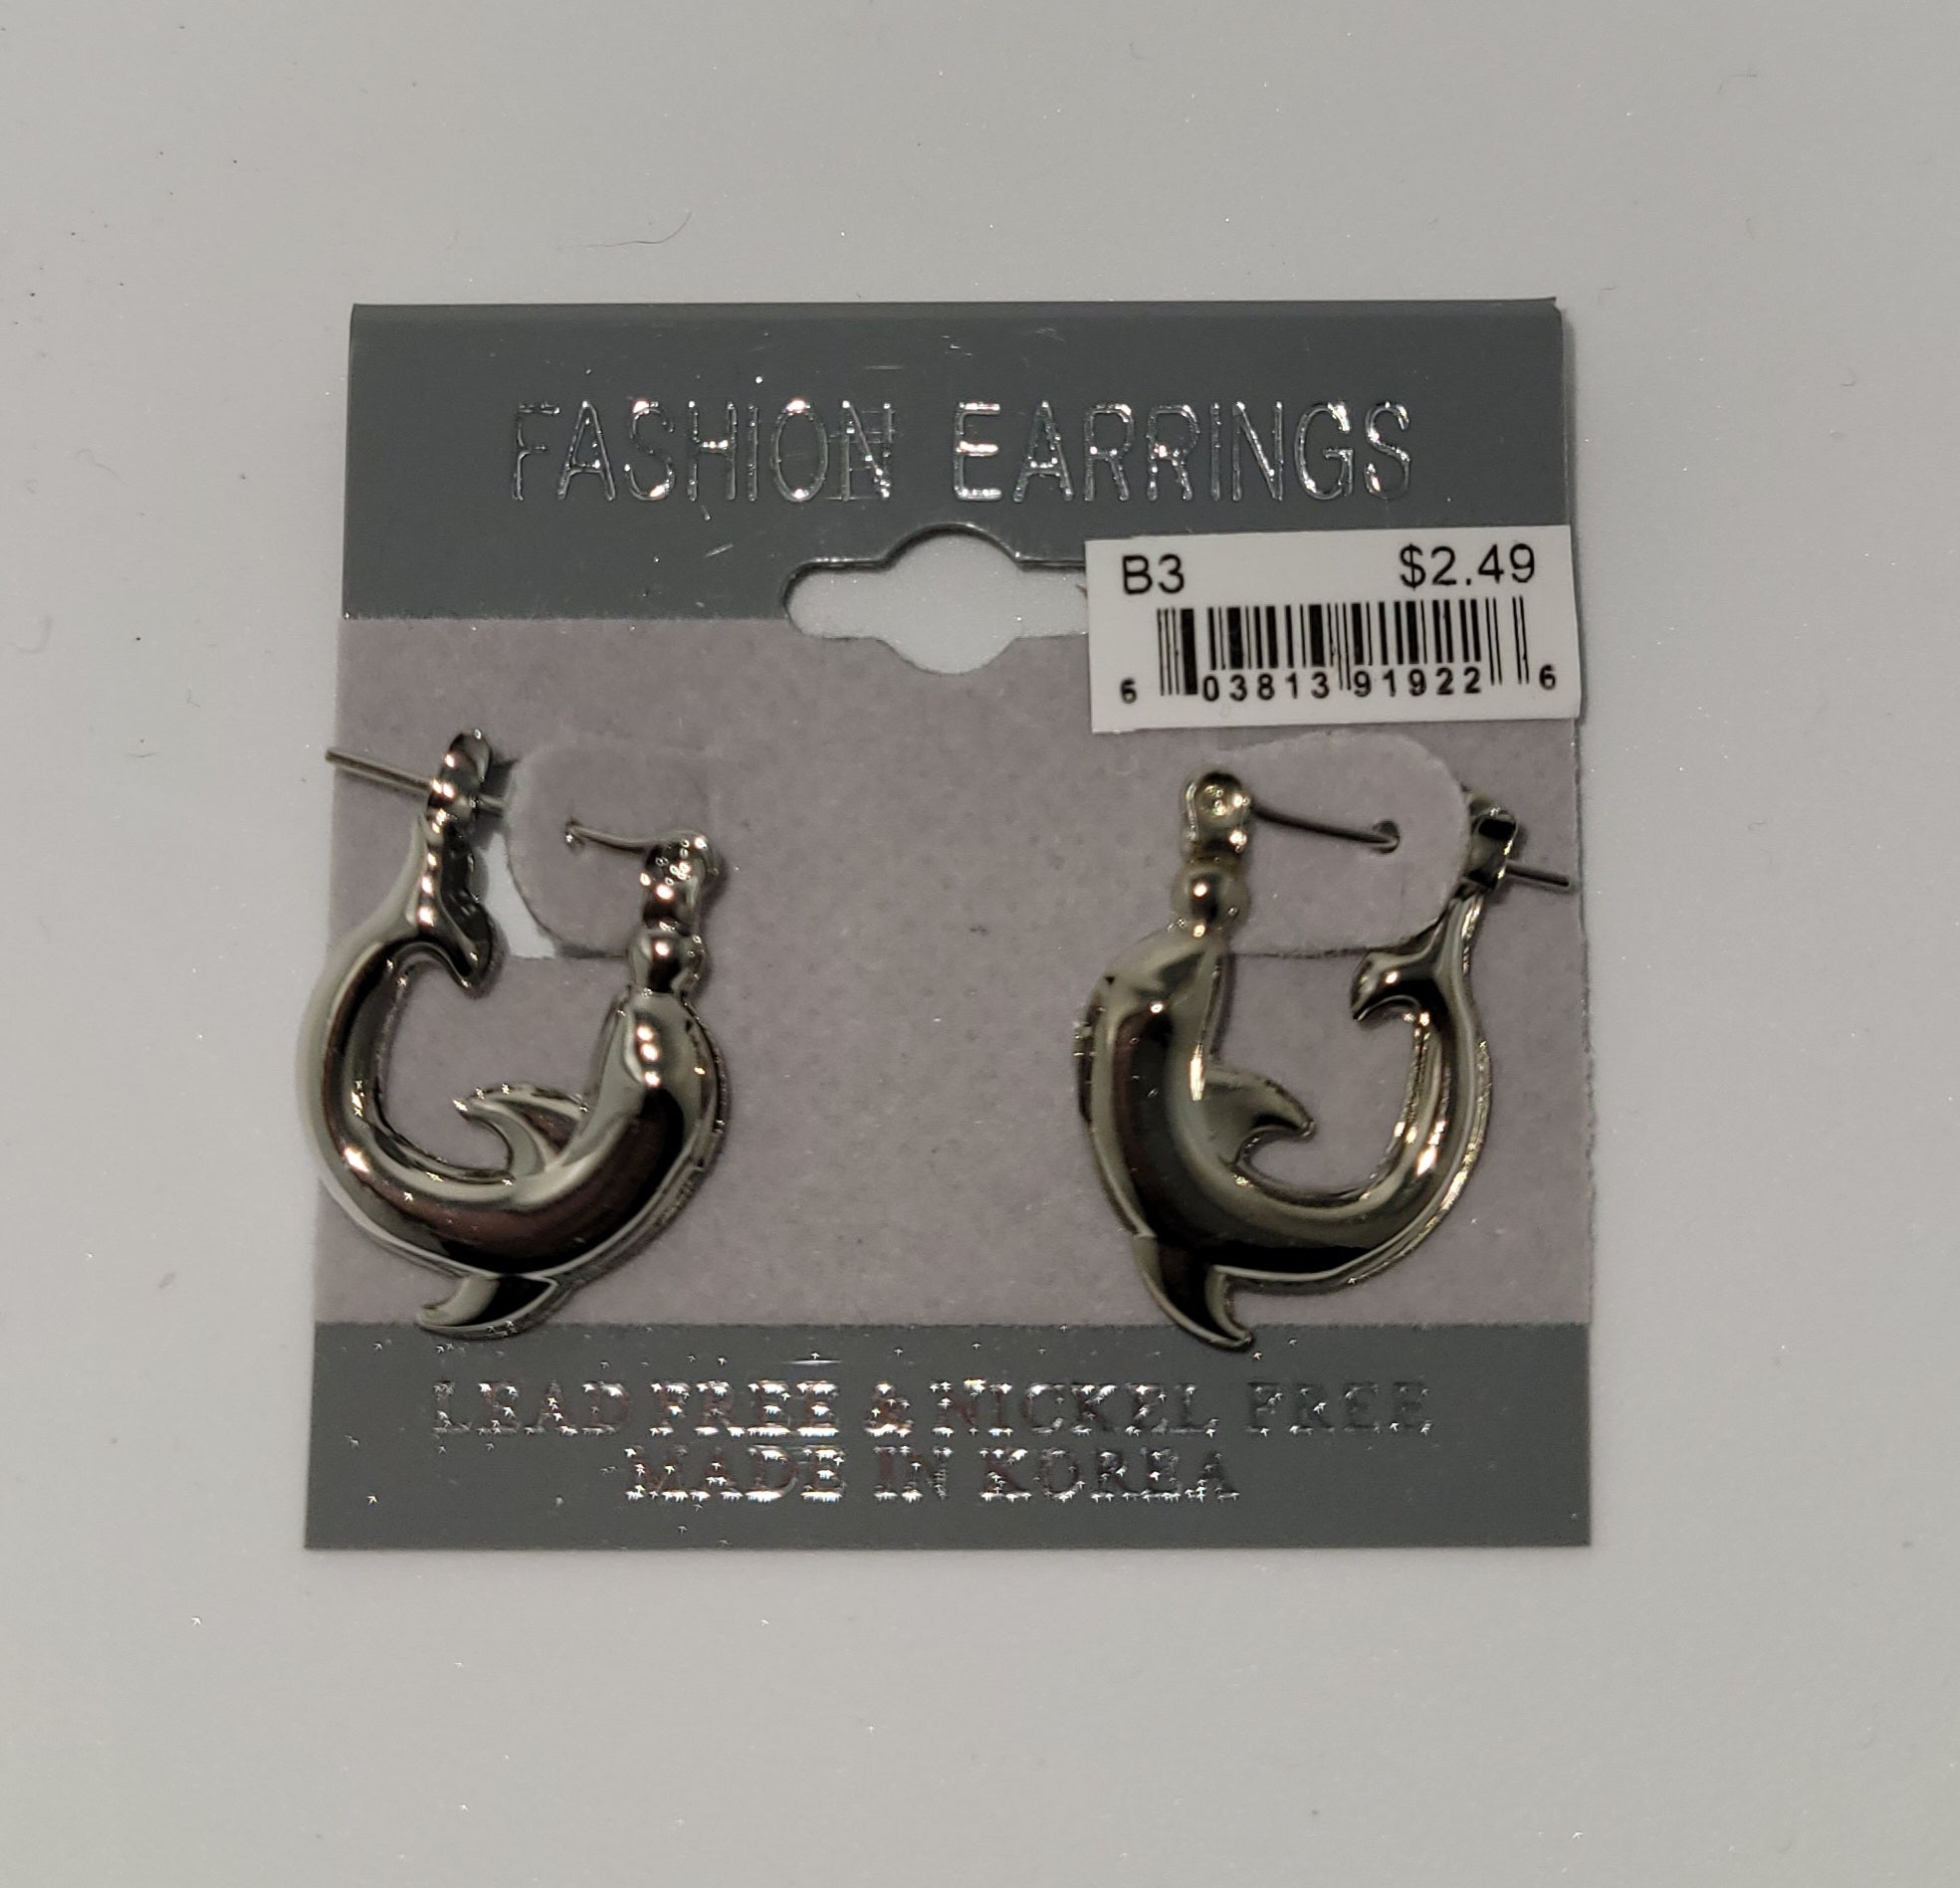 Fashion Earrings Silver (B3)